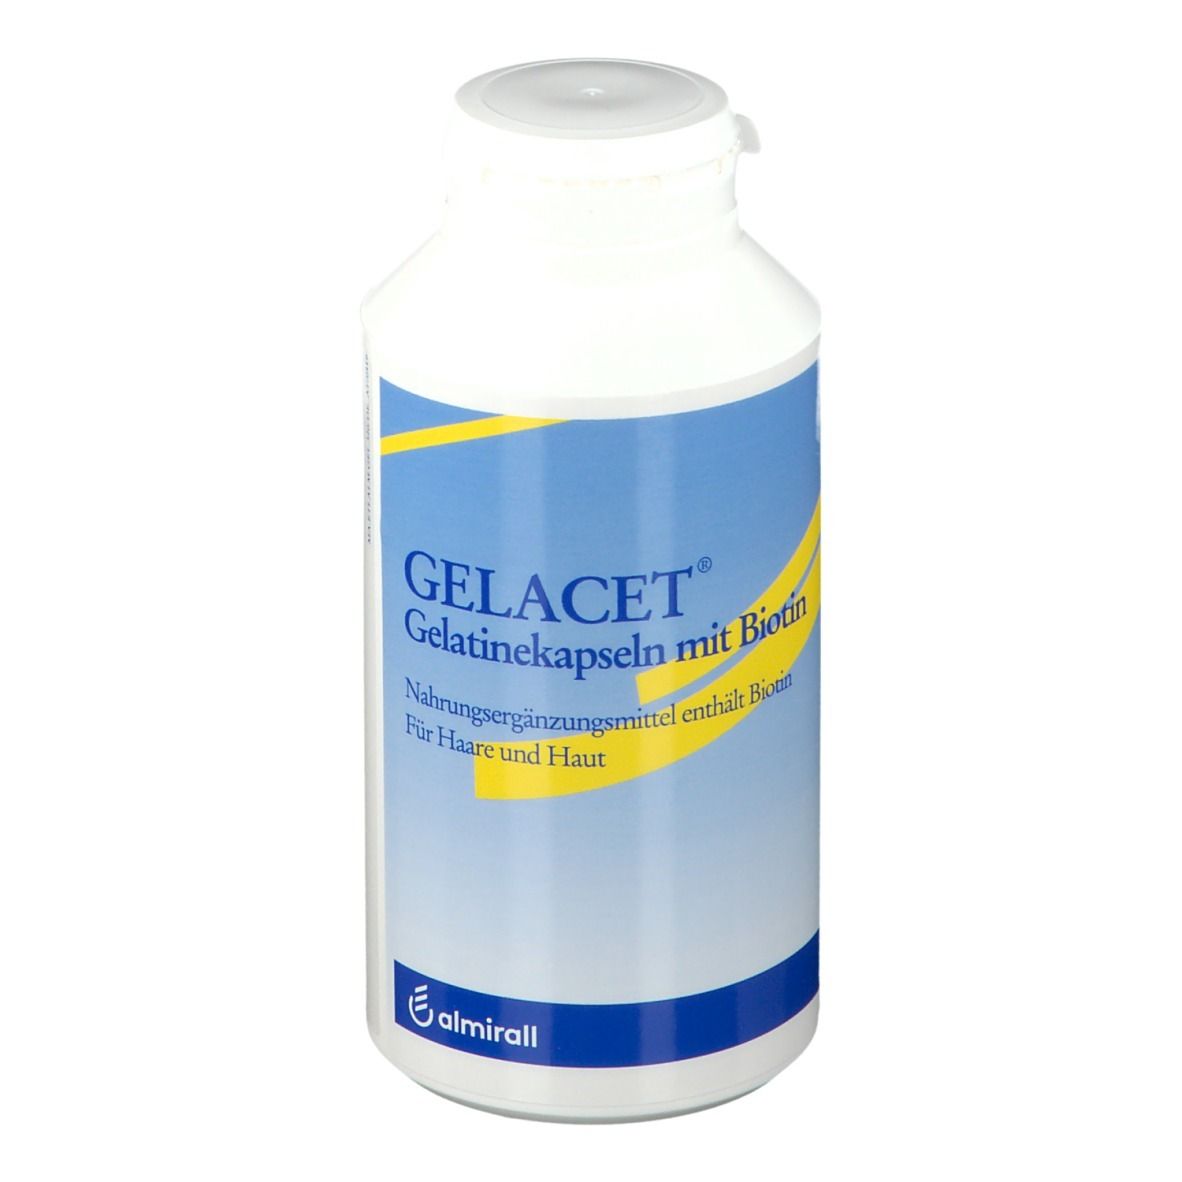 Image of Gelacet® Gelatinekapseln mit Biotin